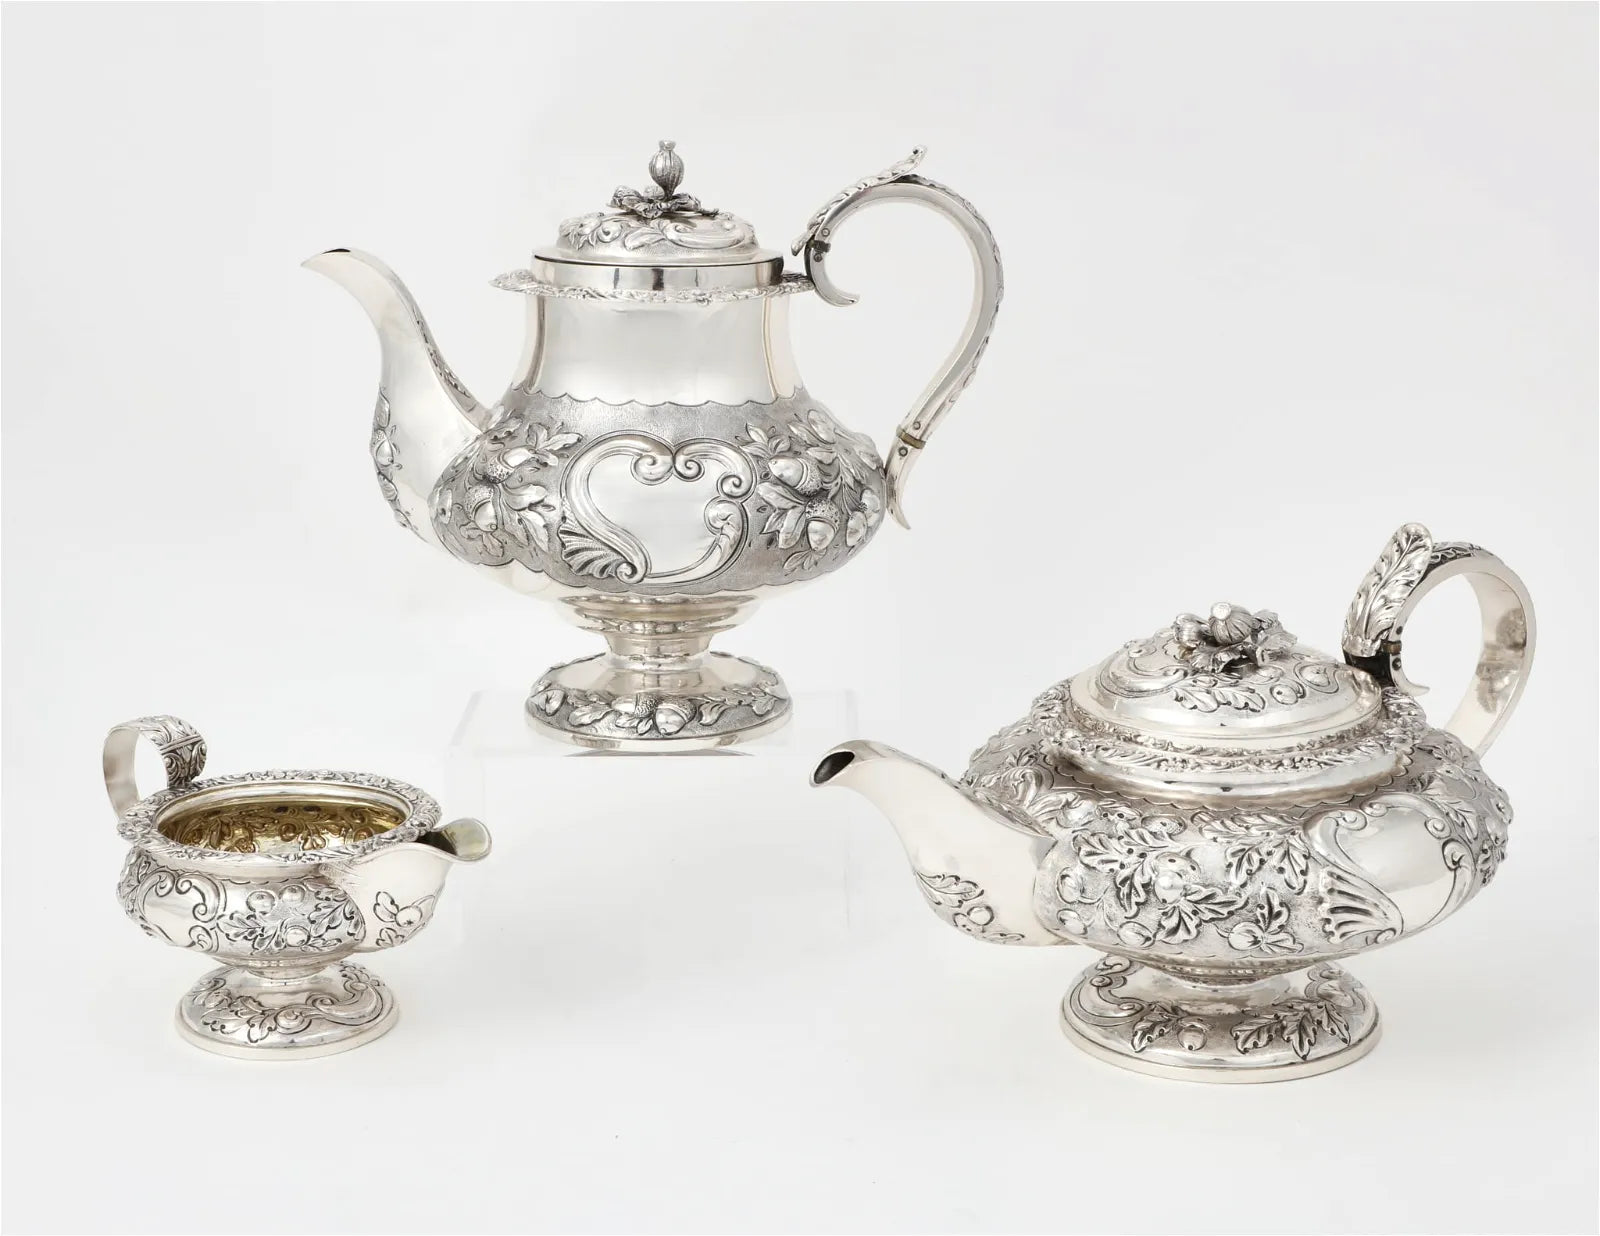 DA2-009: Circa 1825 George IV Silver Partial Tea and Coffee Service - Napthali Hart, London